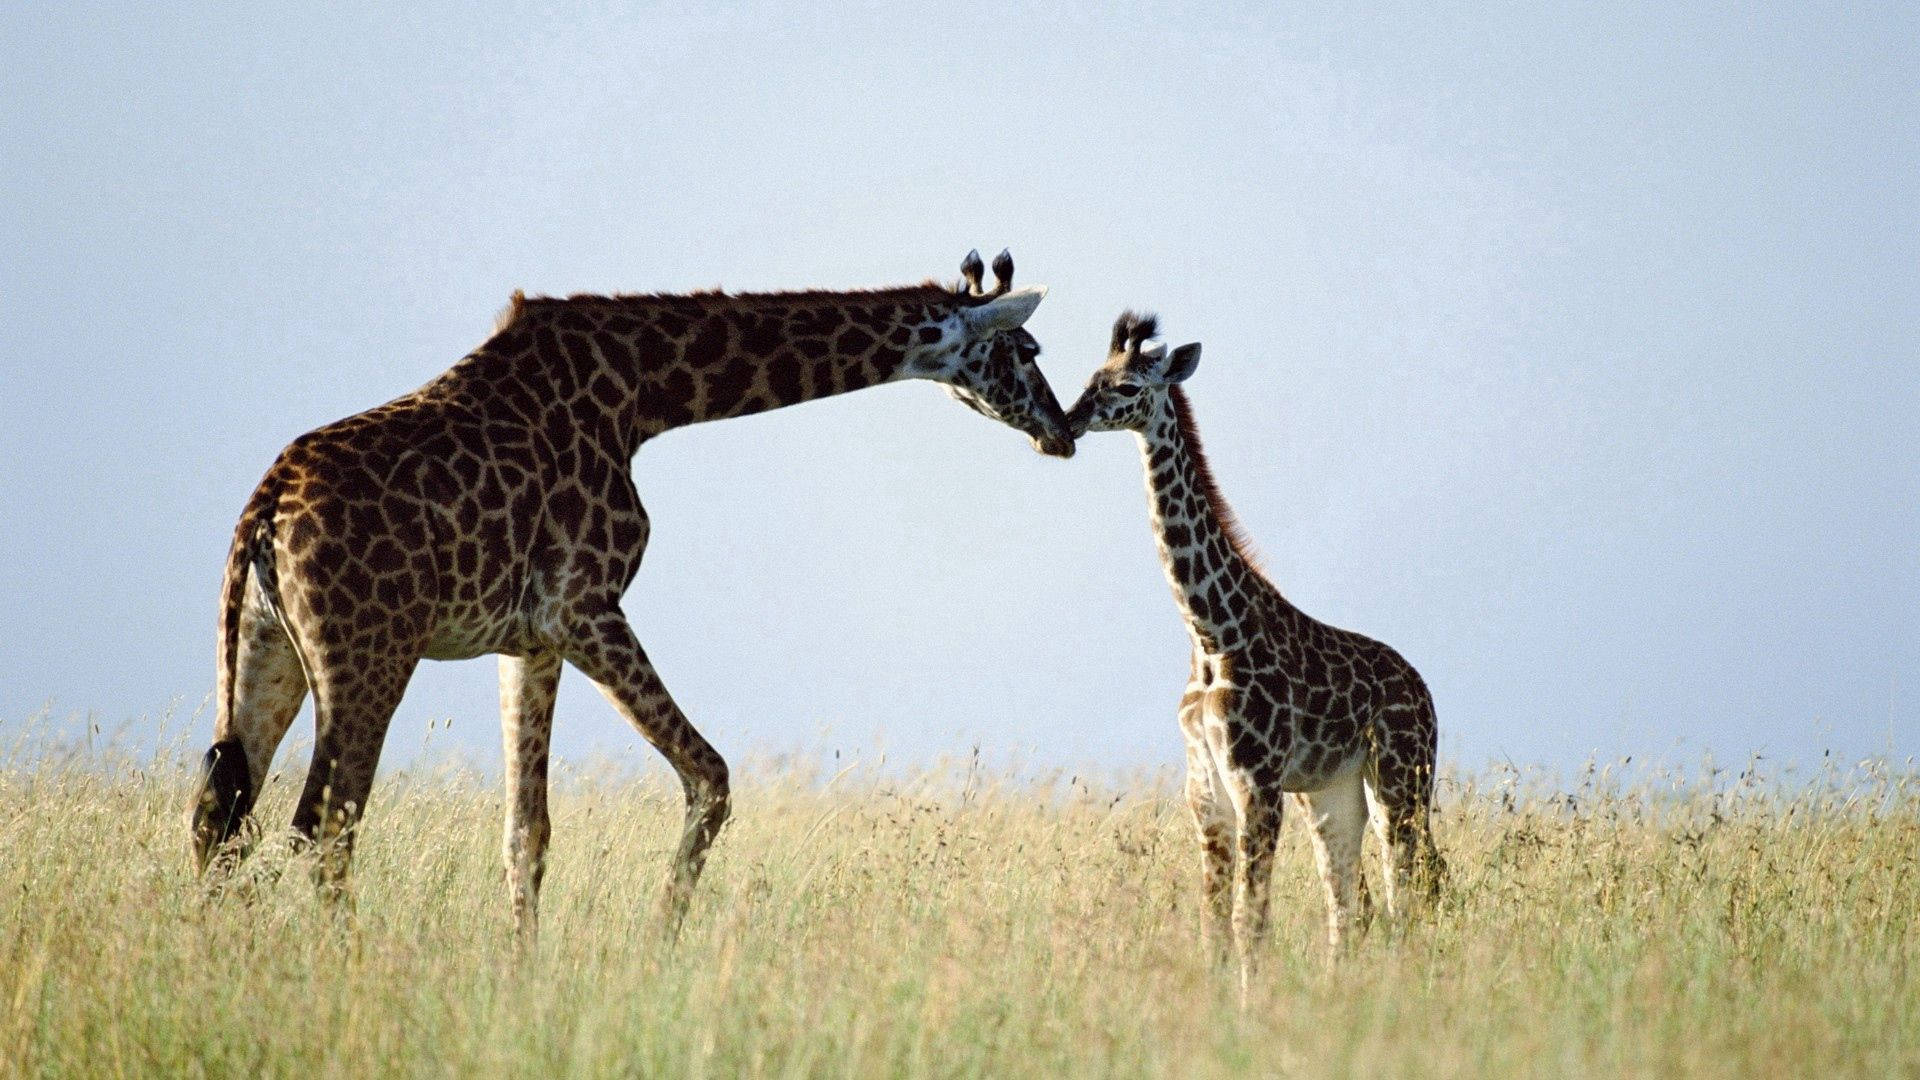 Giraffe Family In Grassland